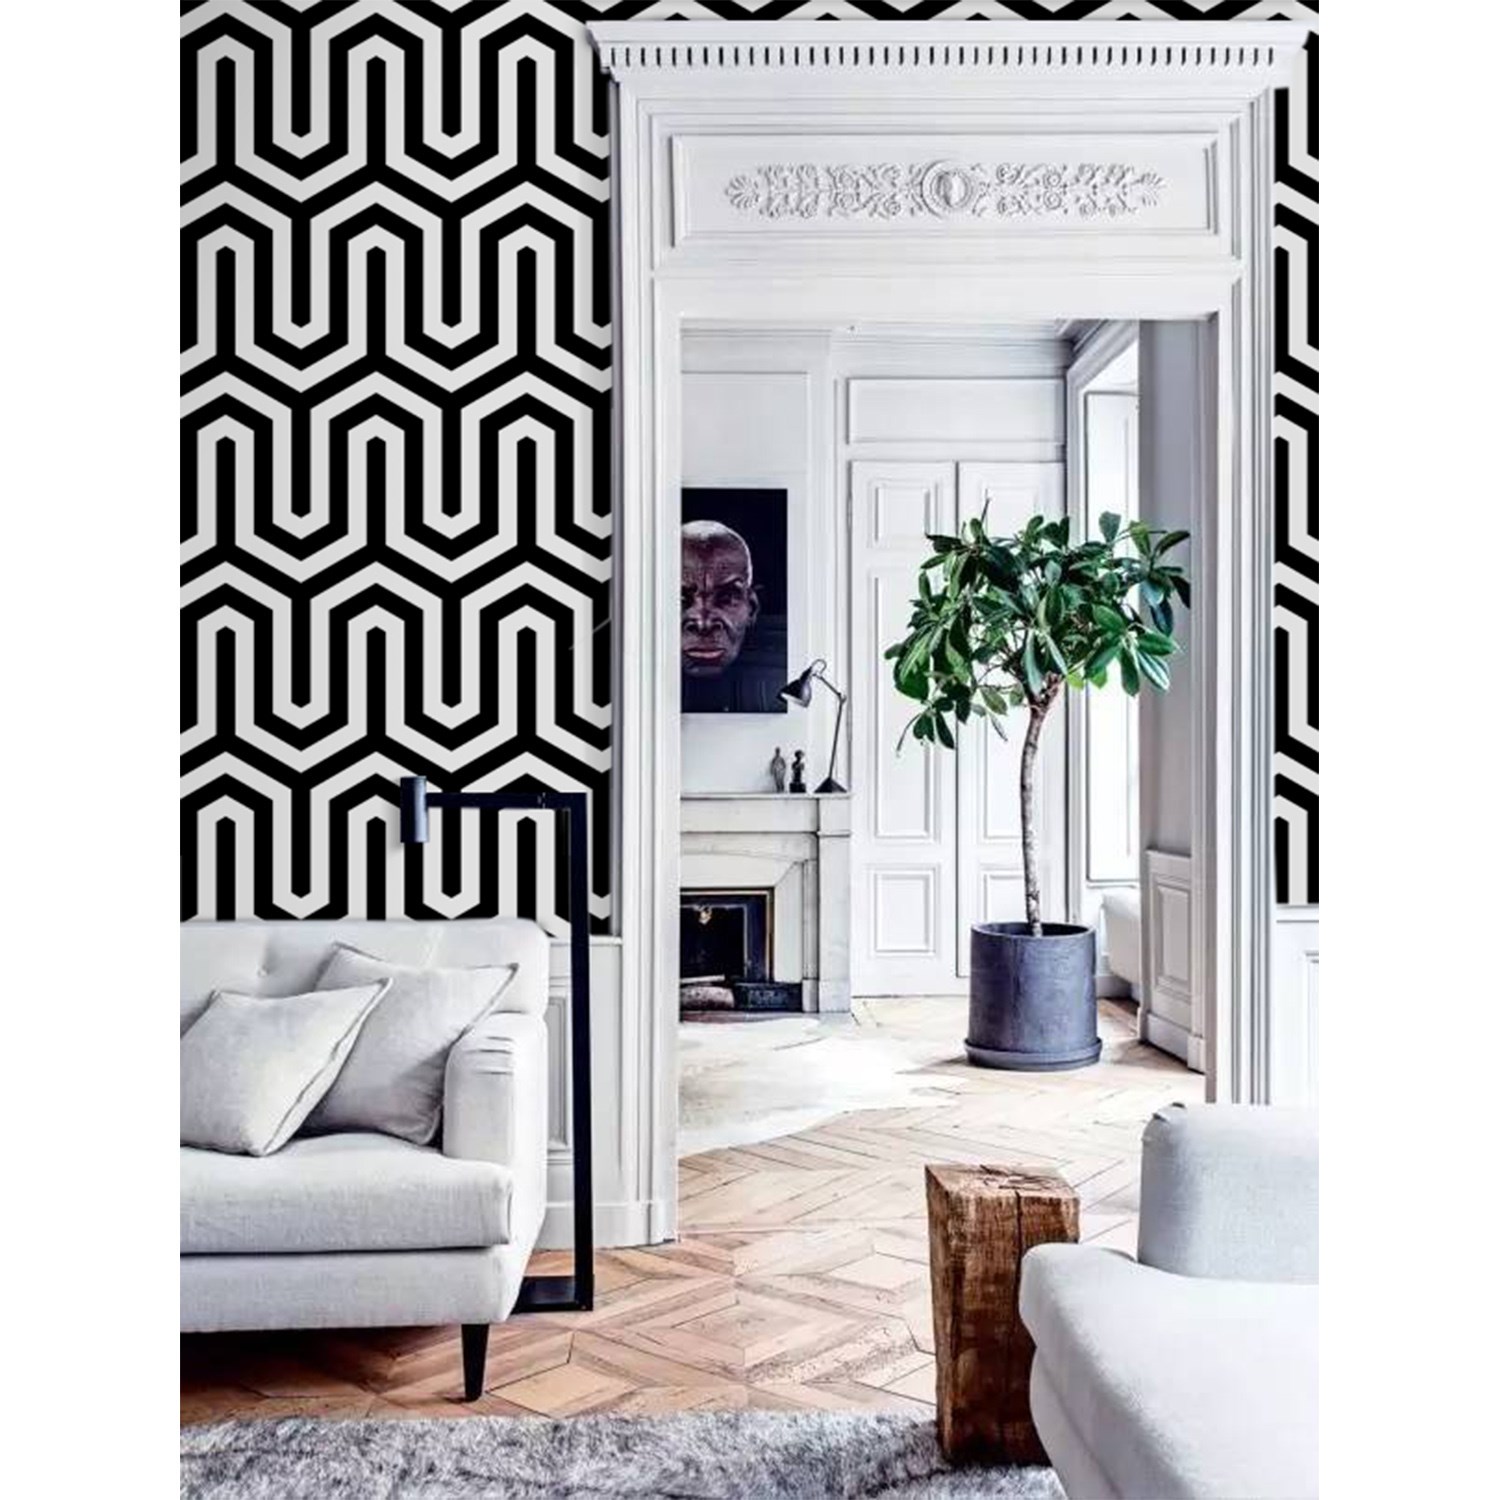 geometric pattern in scandinavian style self adhesive wallpaper peel and stick wall mural temporary wallpaper Grey chevron wallpaper